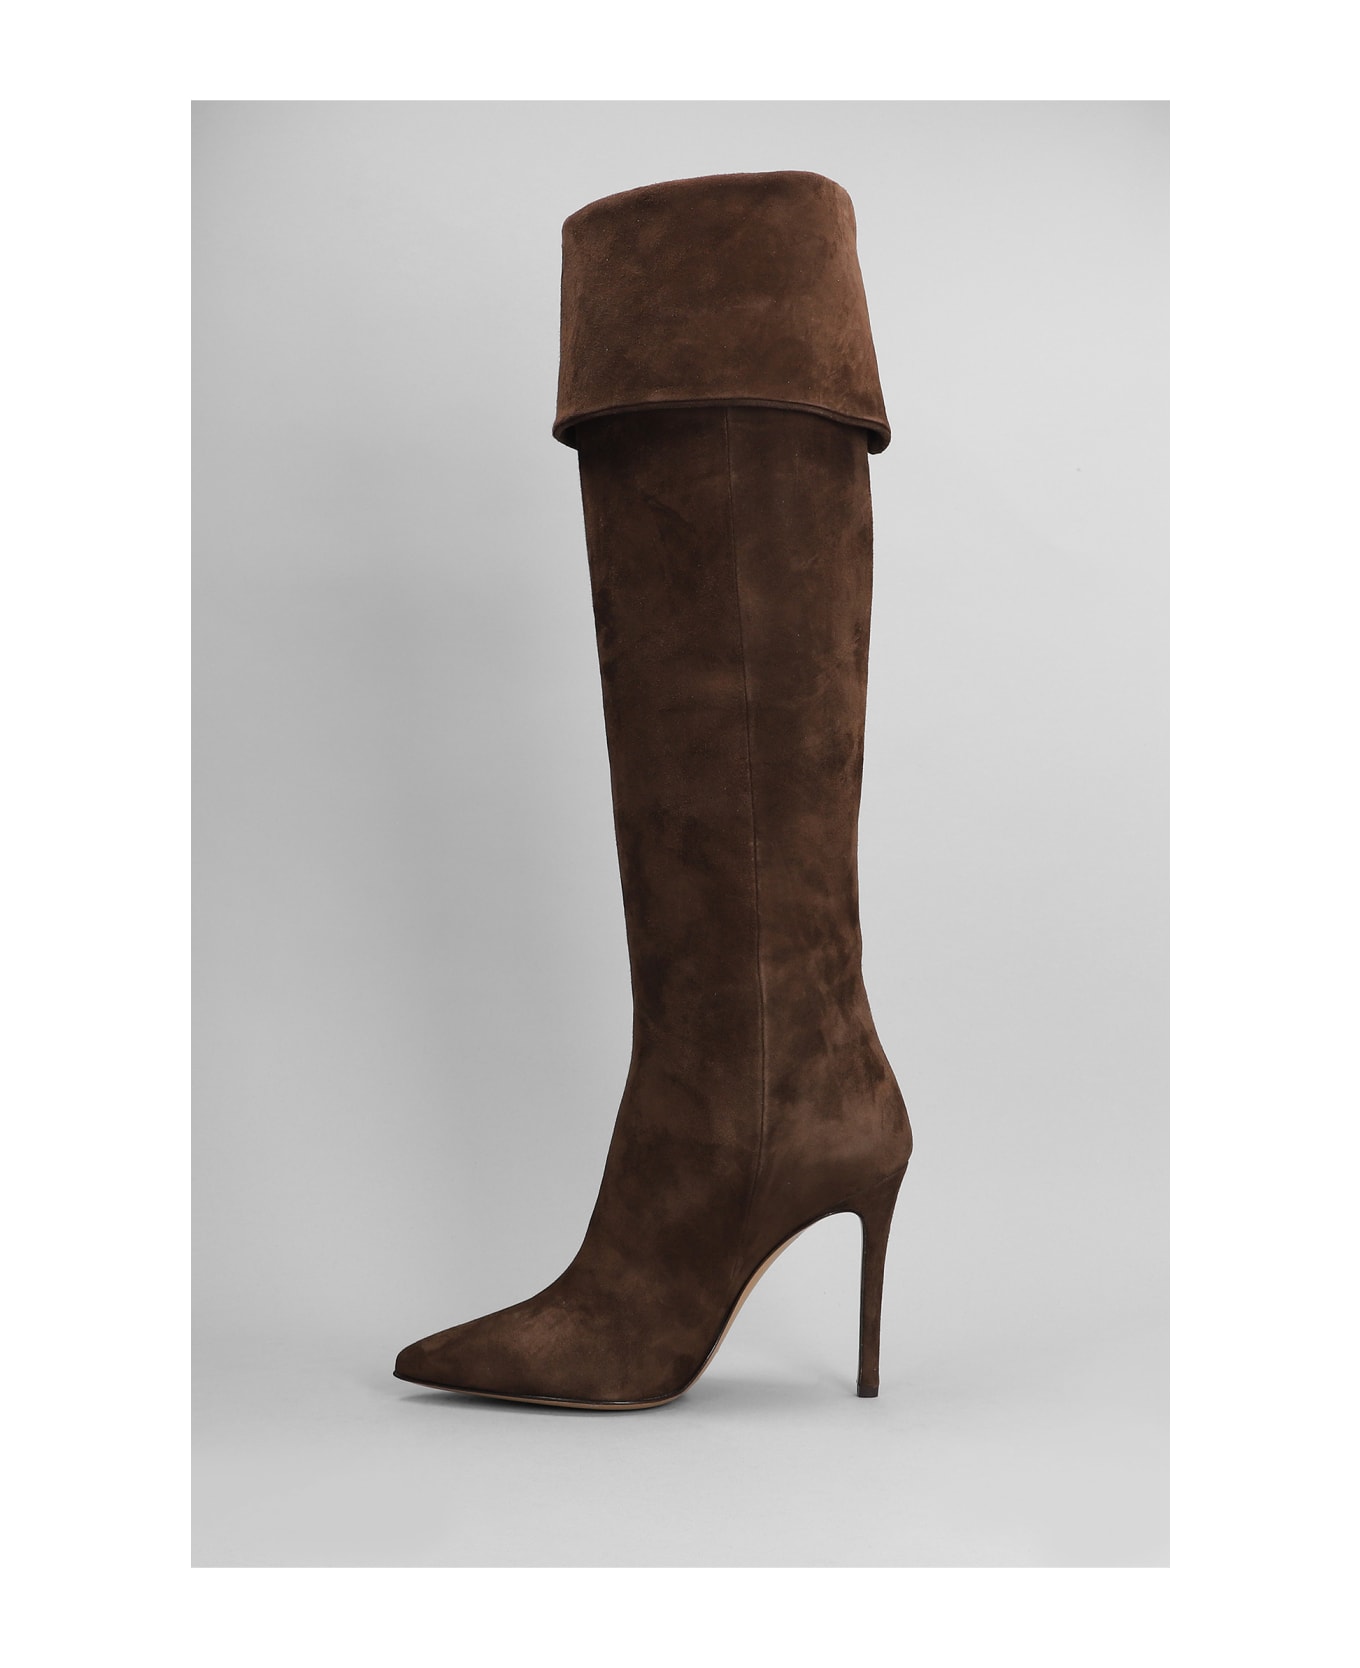 The Seller High Heels Boots In Dark Brown Suede - dark brown